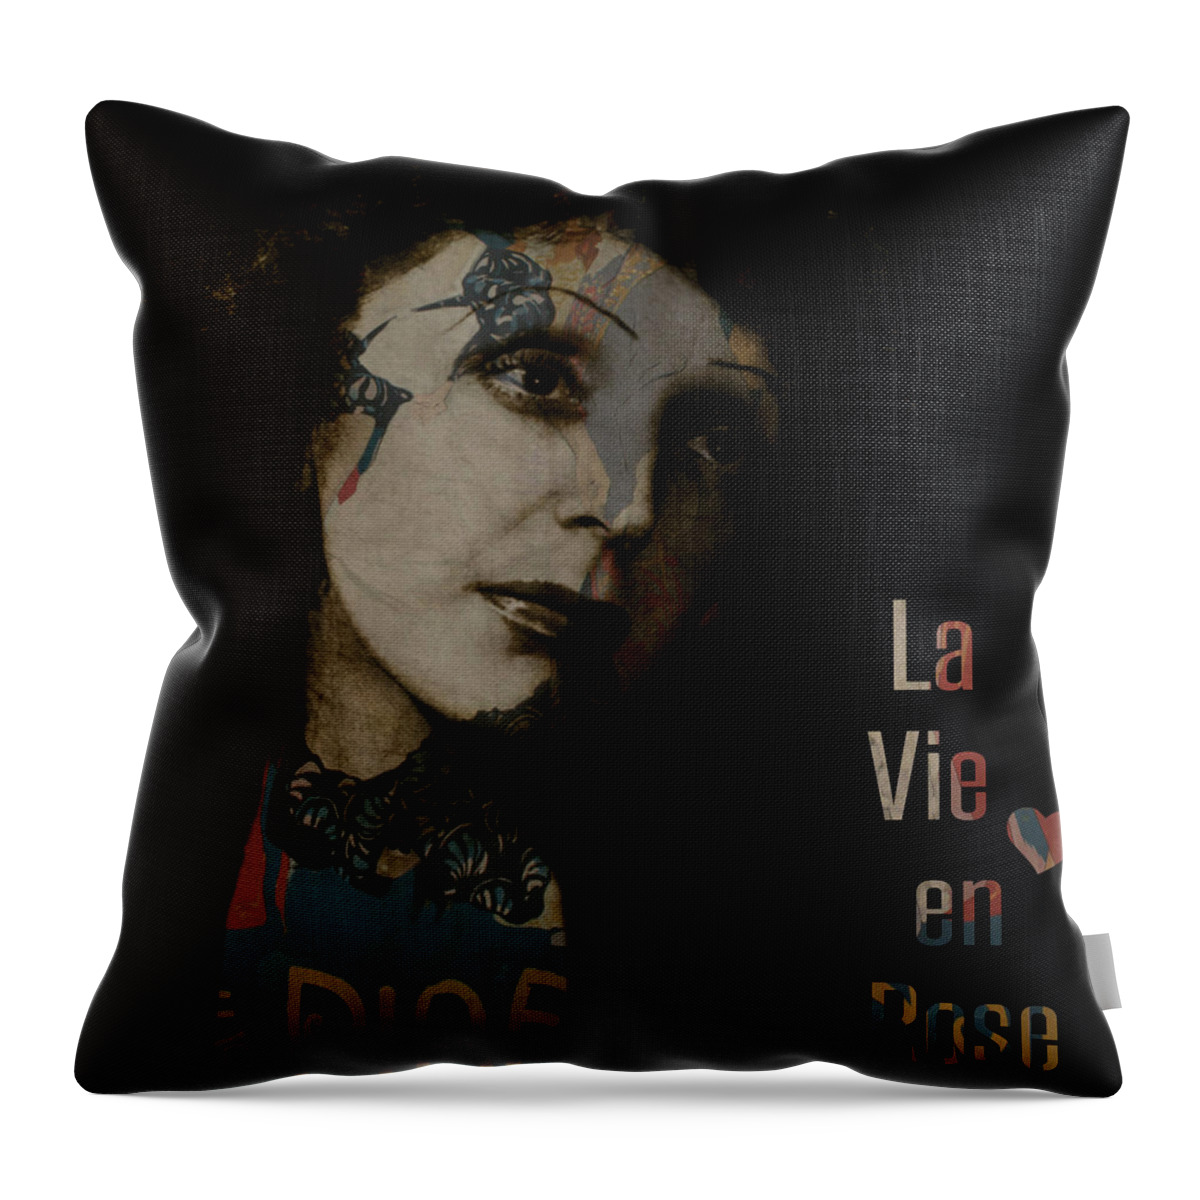 Edith Piaf Throw Pillow featuring the digital art Le Vie En Rose by Paul Lovering